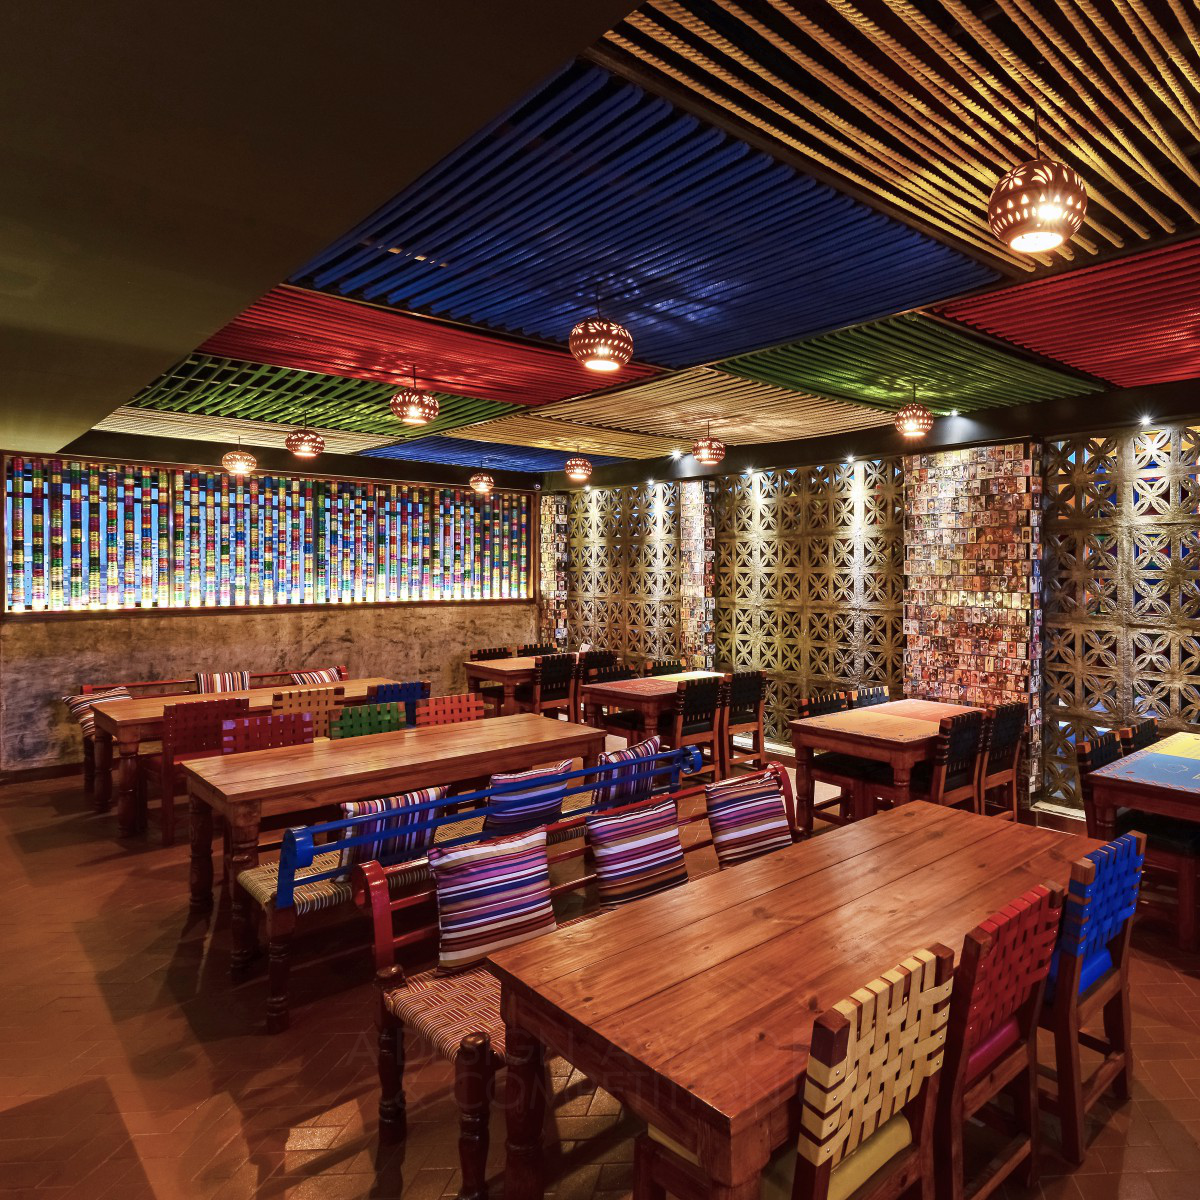 Rangla Punjab Restaurant And Bar by Ketan Jawdekar